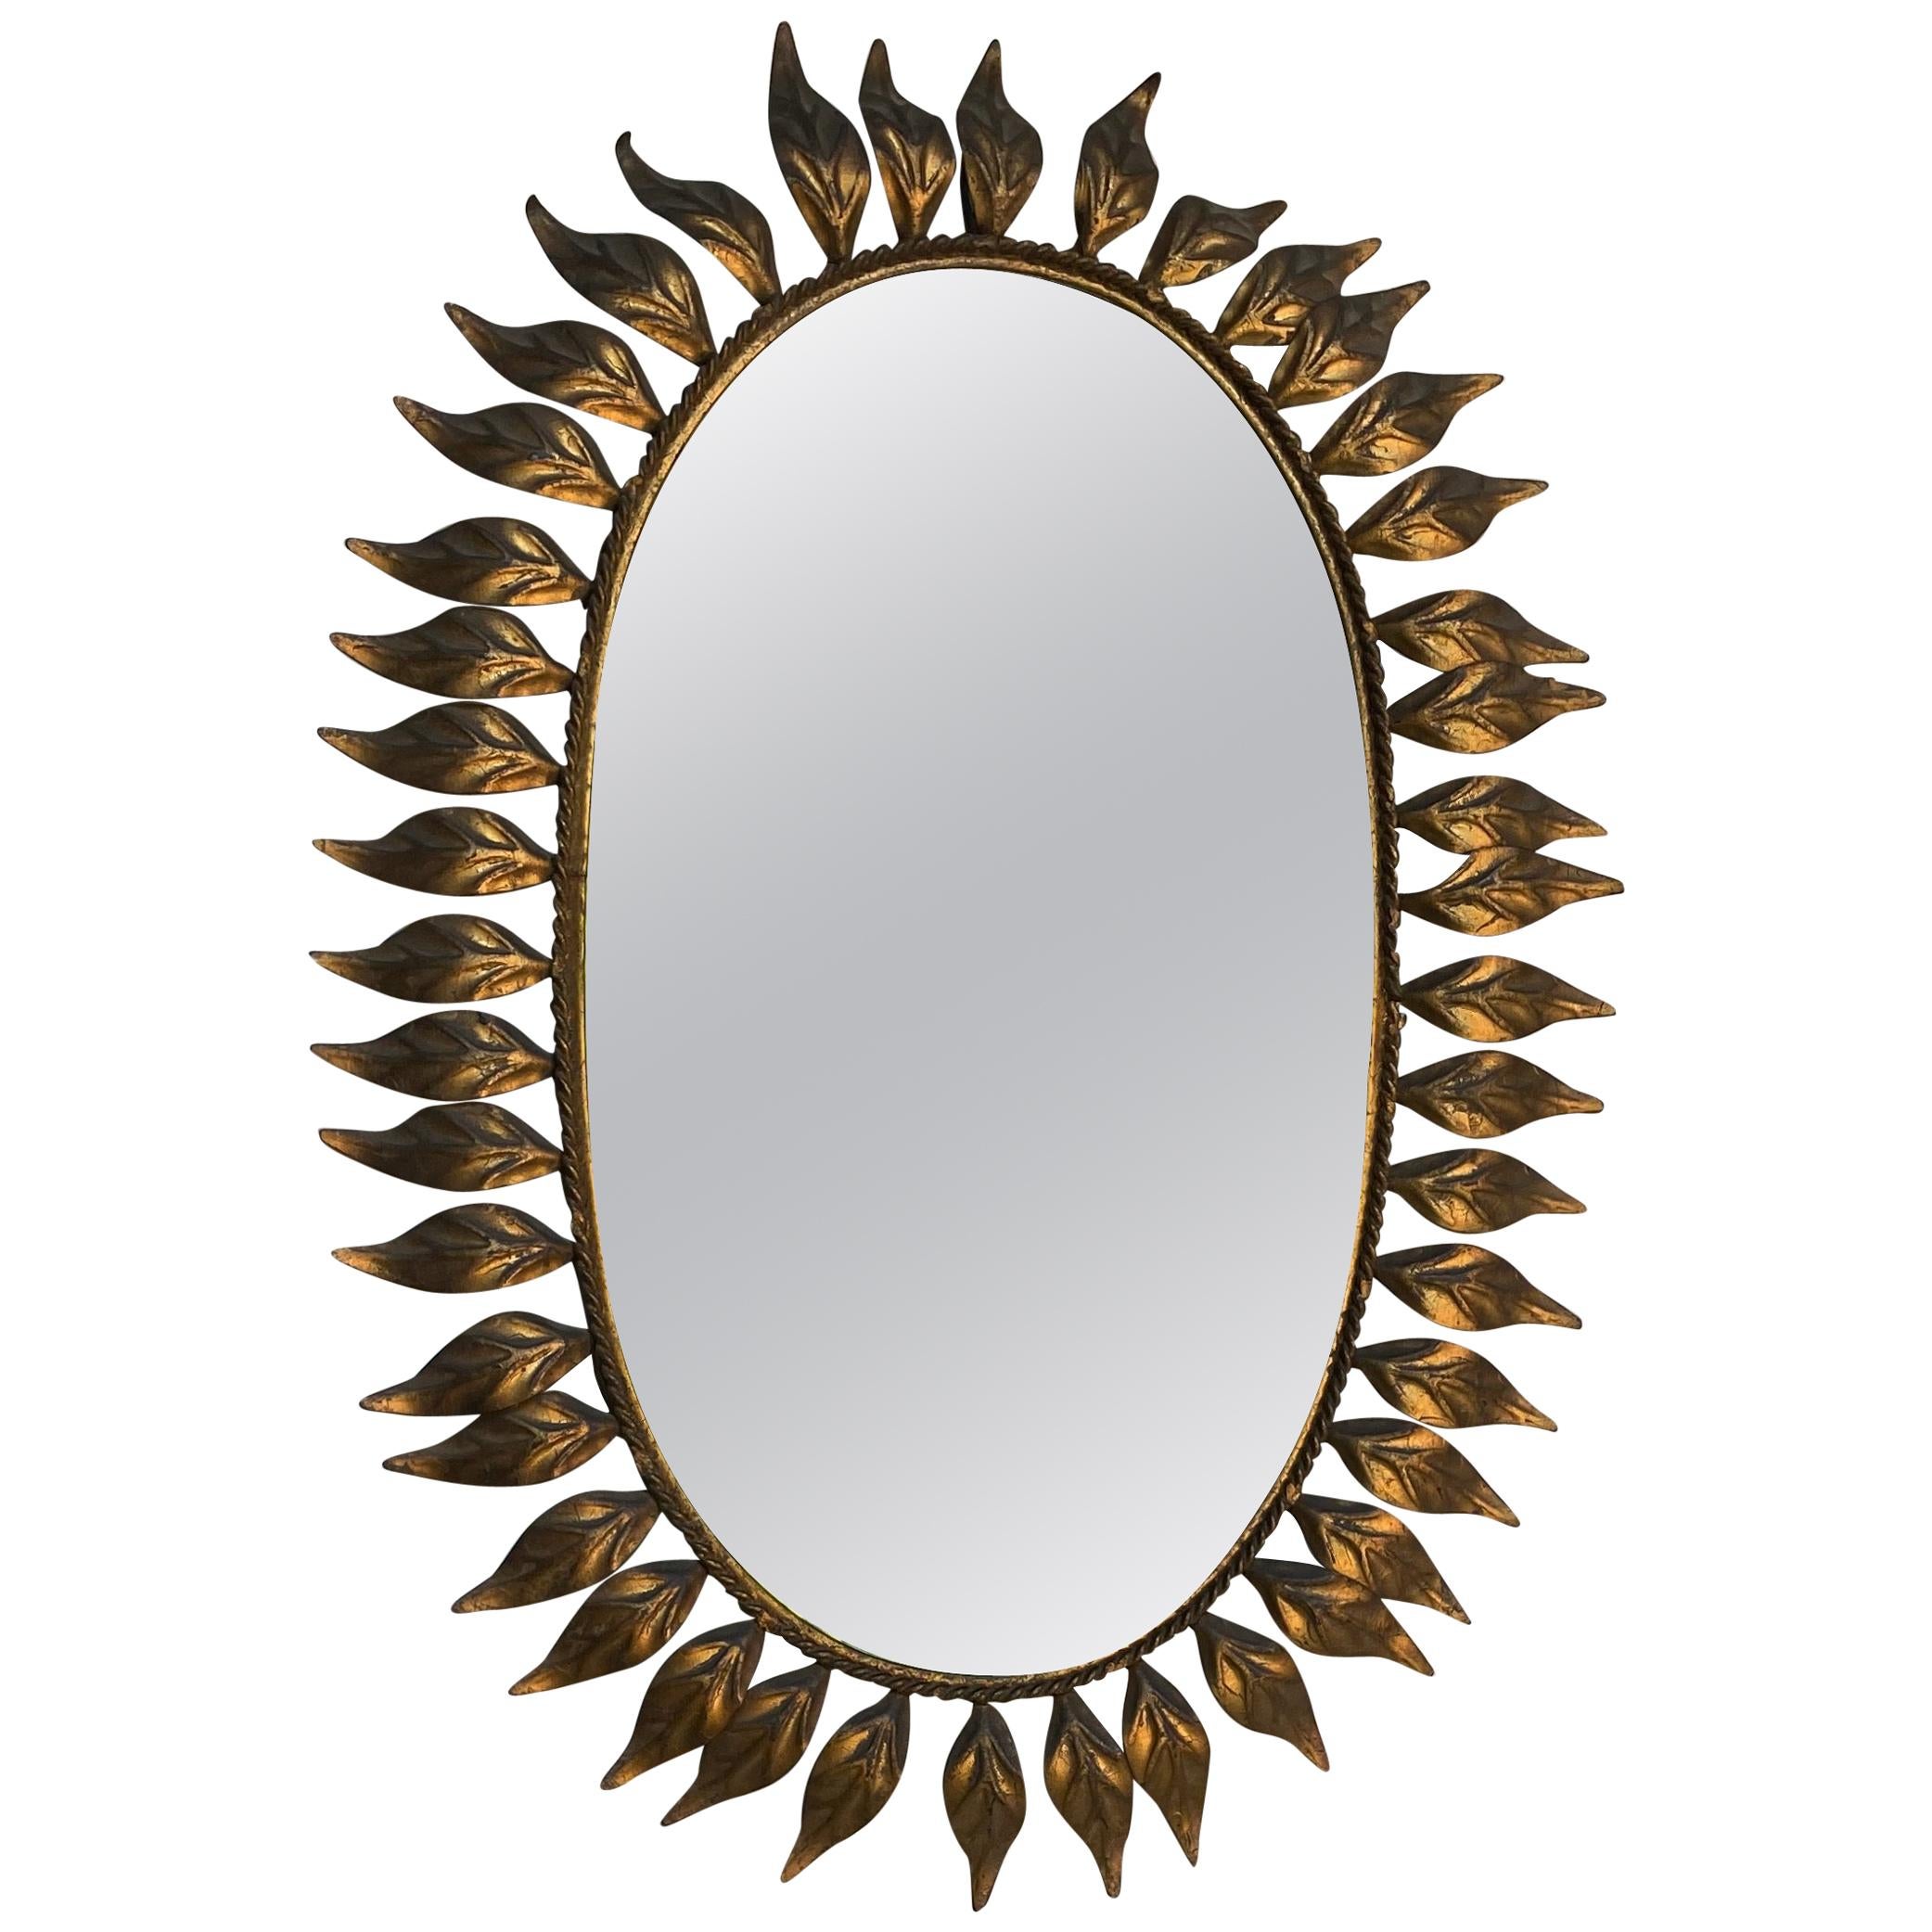 Spanish Oval Gilt Metal Sunburst Mirror with Curved Leaves